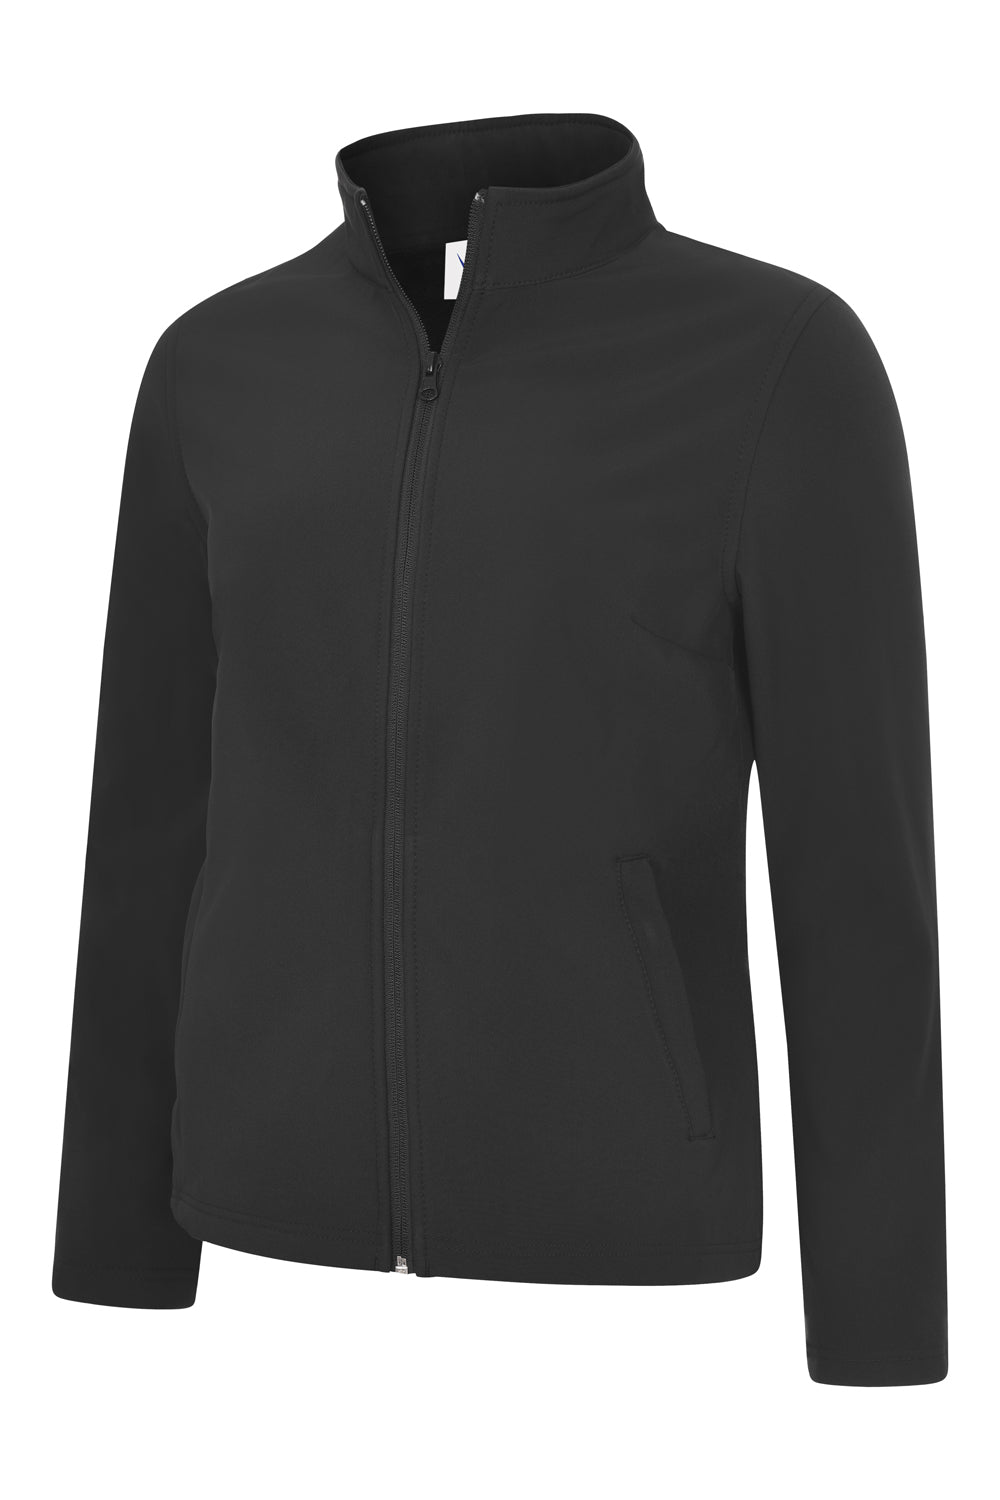 Uneek Ladies Classic Full Zip Soft Shell Jacket UC613 - Black